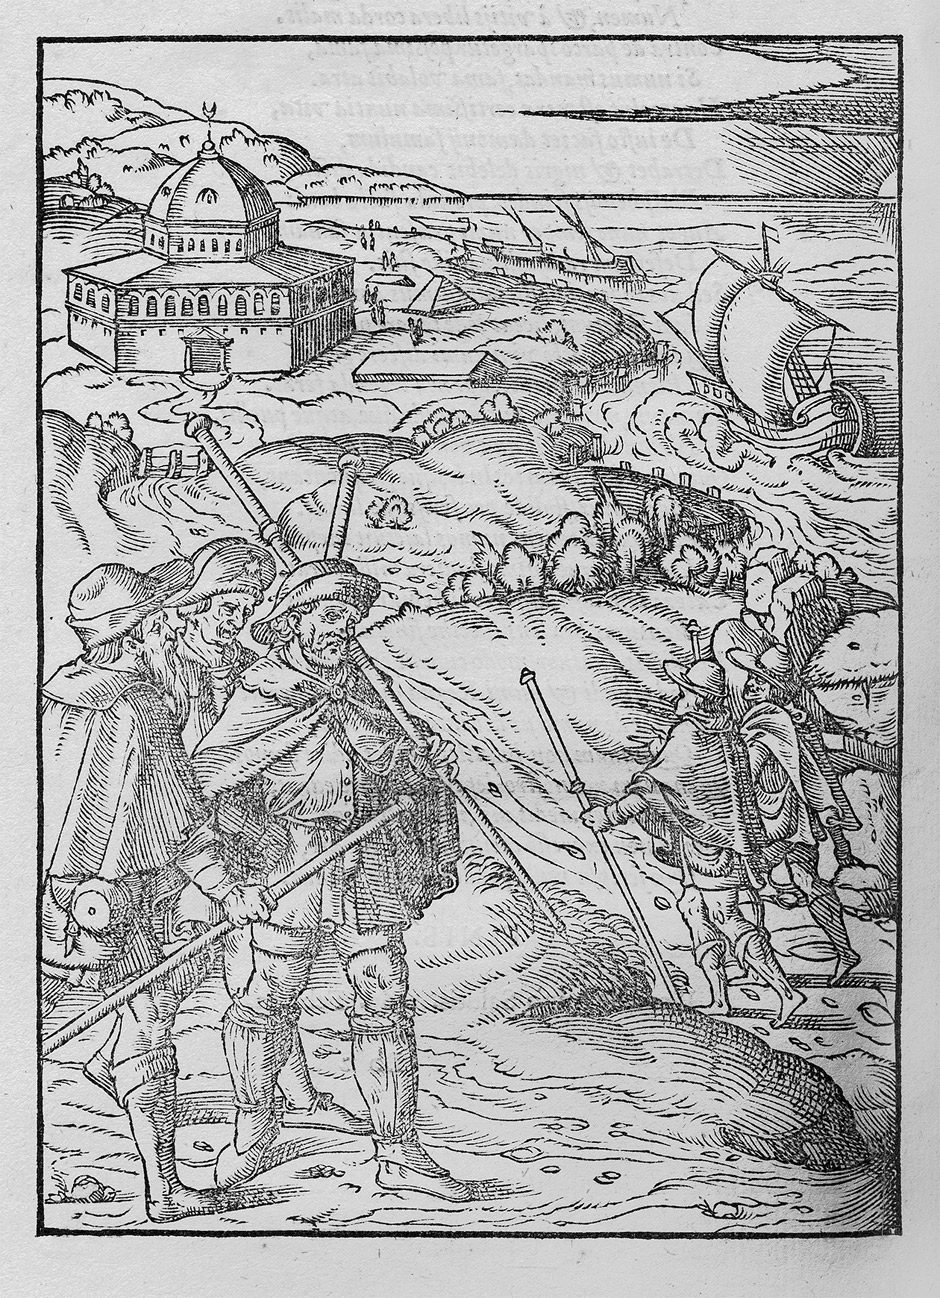 Lot 1092, Auction  115, Damhouder, Joos de, Promptuarium theologicum. Antwerpen, Witwe und Erben Johann Beller, 1596